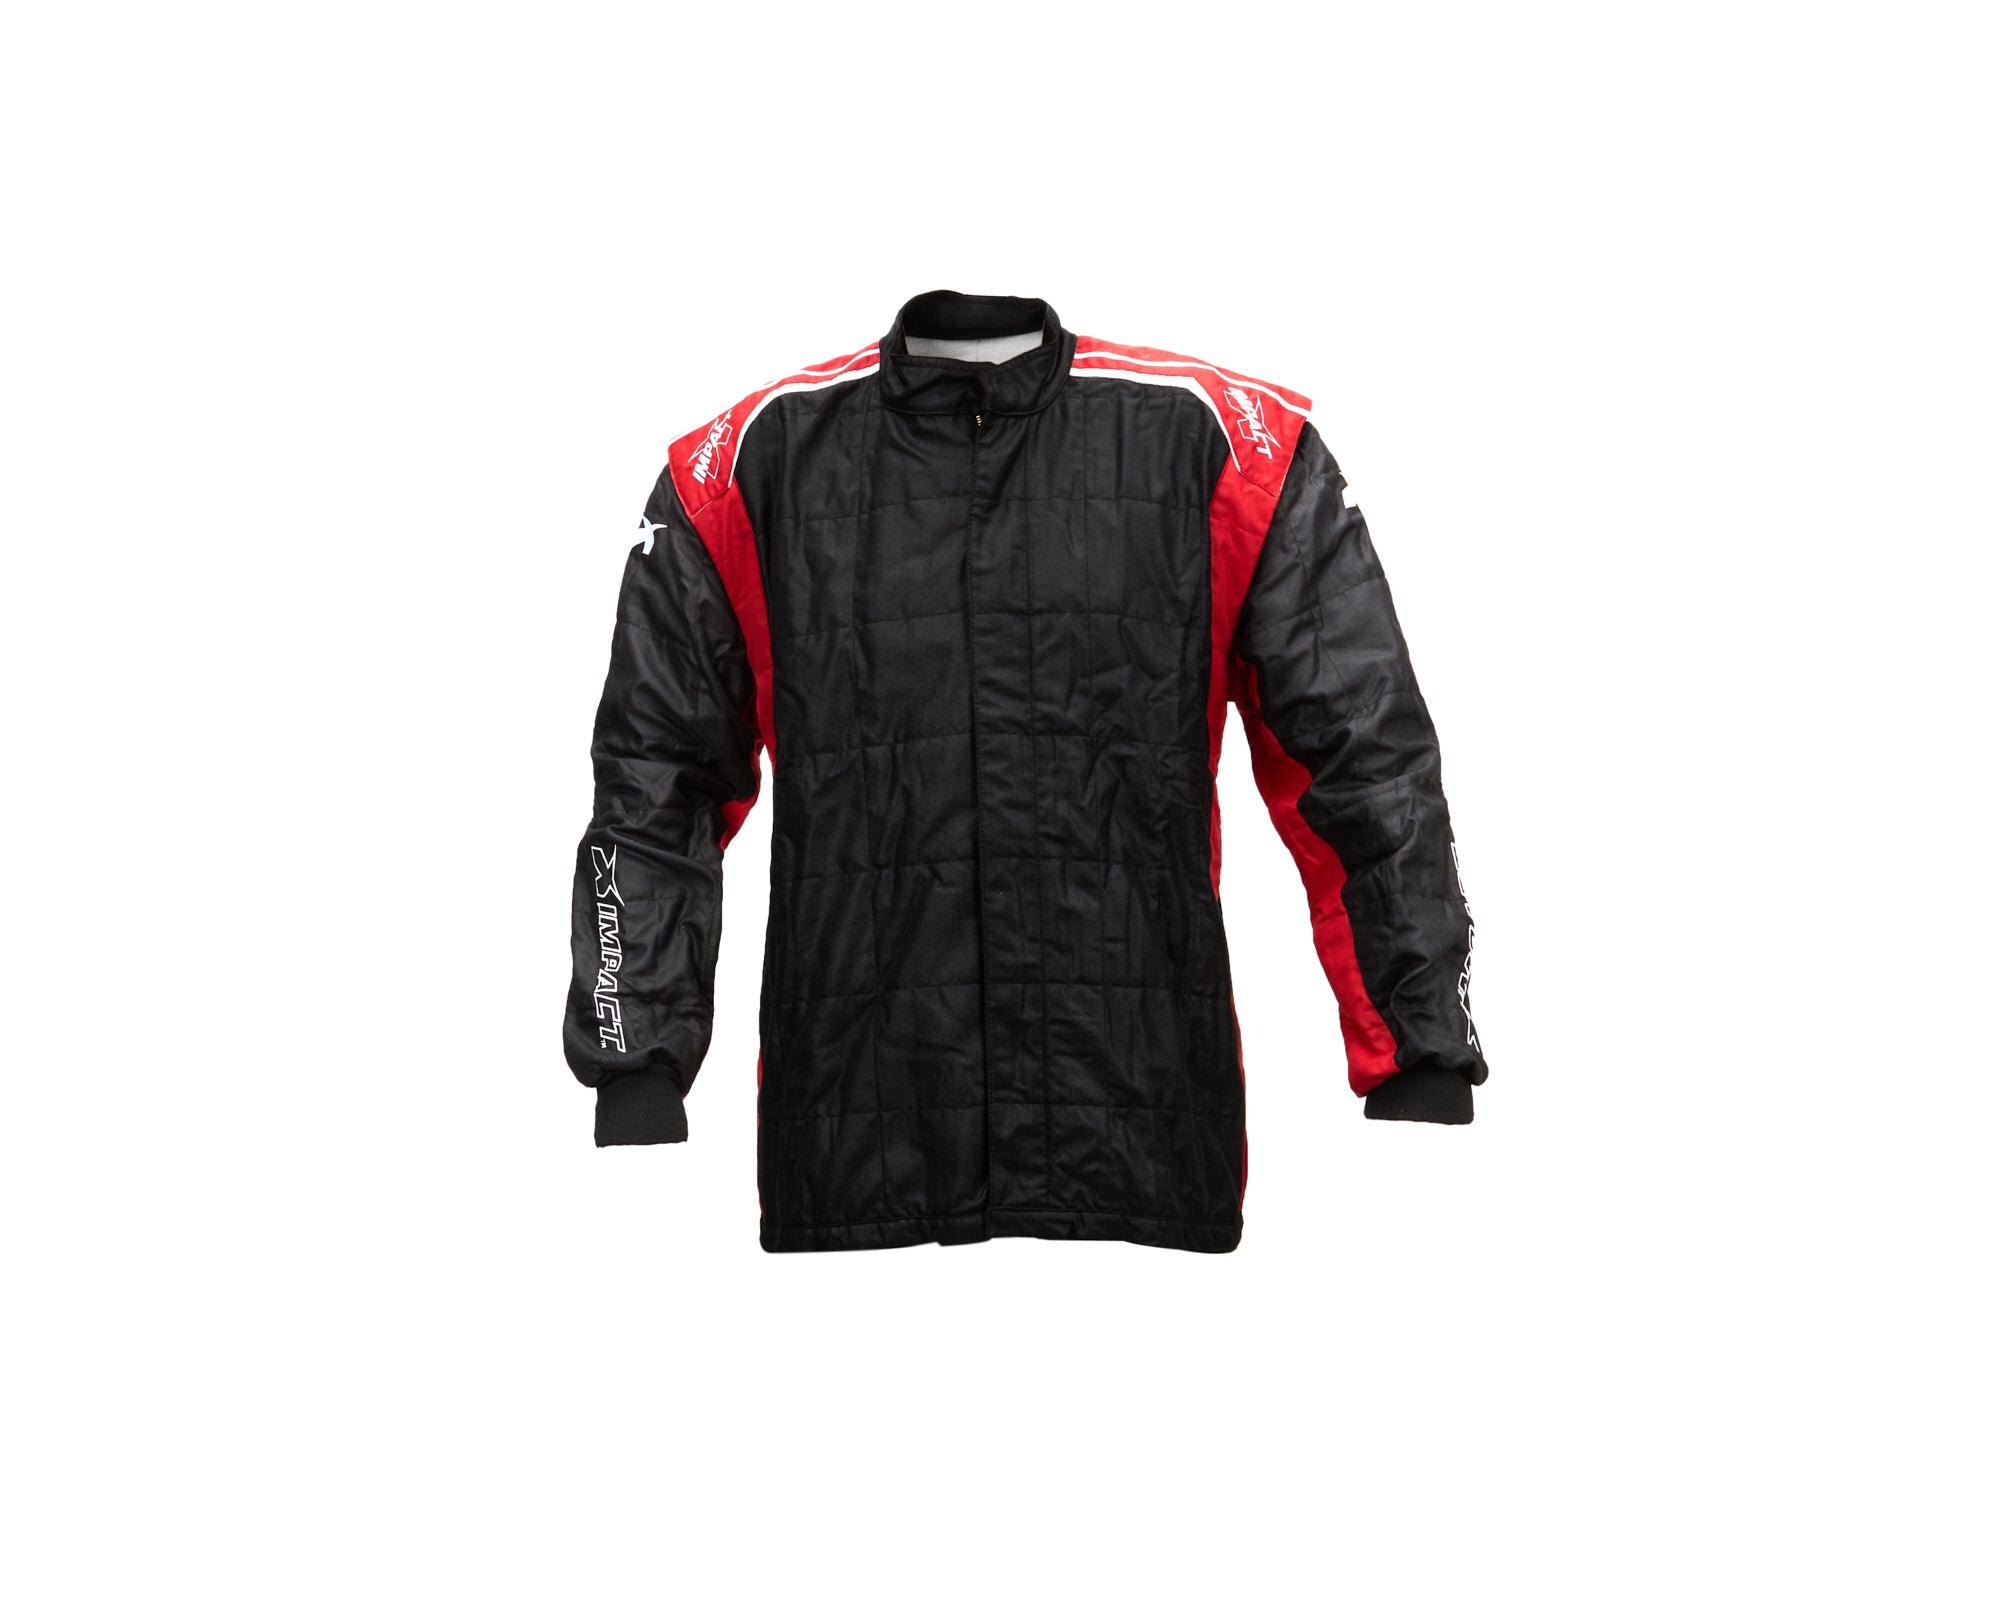 Jacket Racer 2.0 X-Large Black/Red - Burlile Performance Products